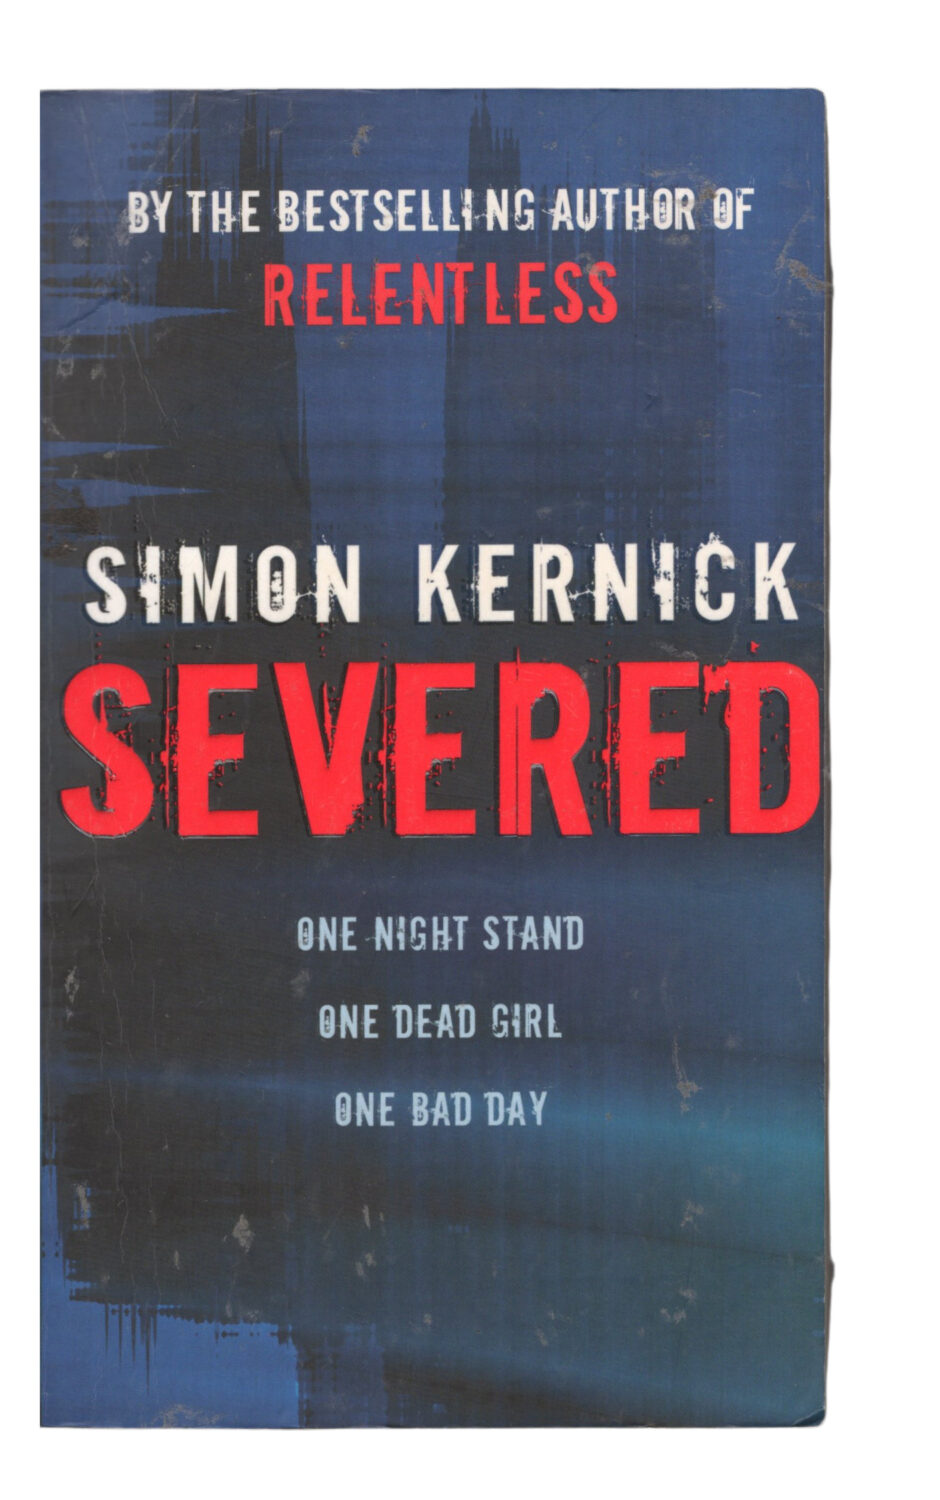 Simon Kernick - Severed